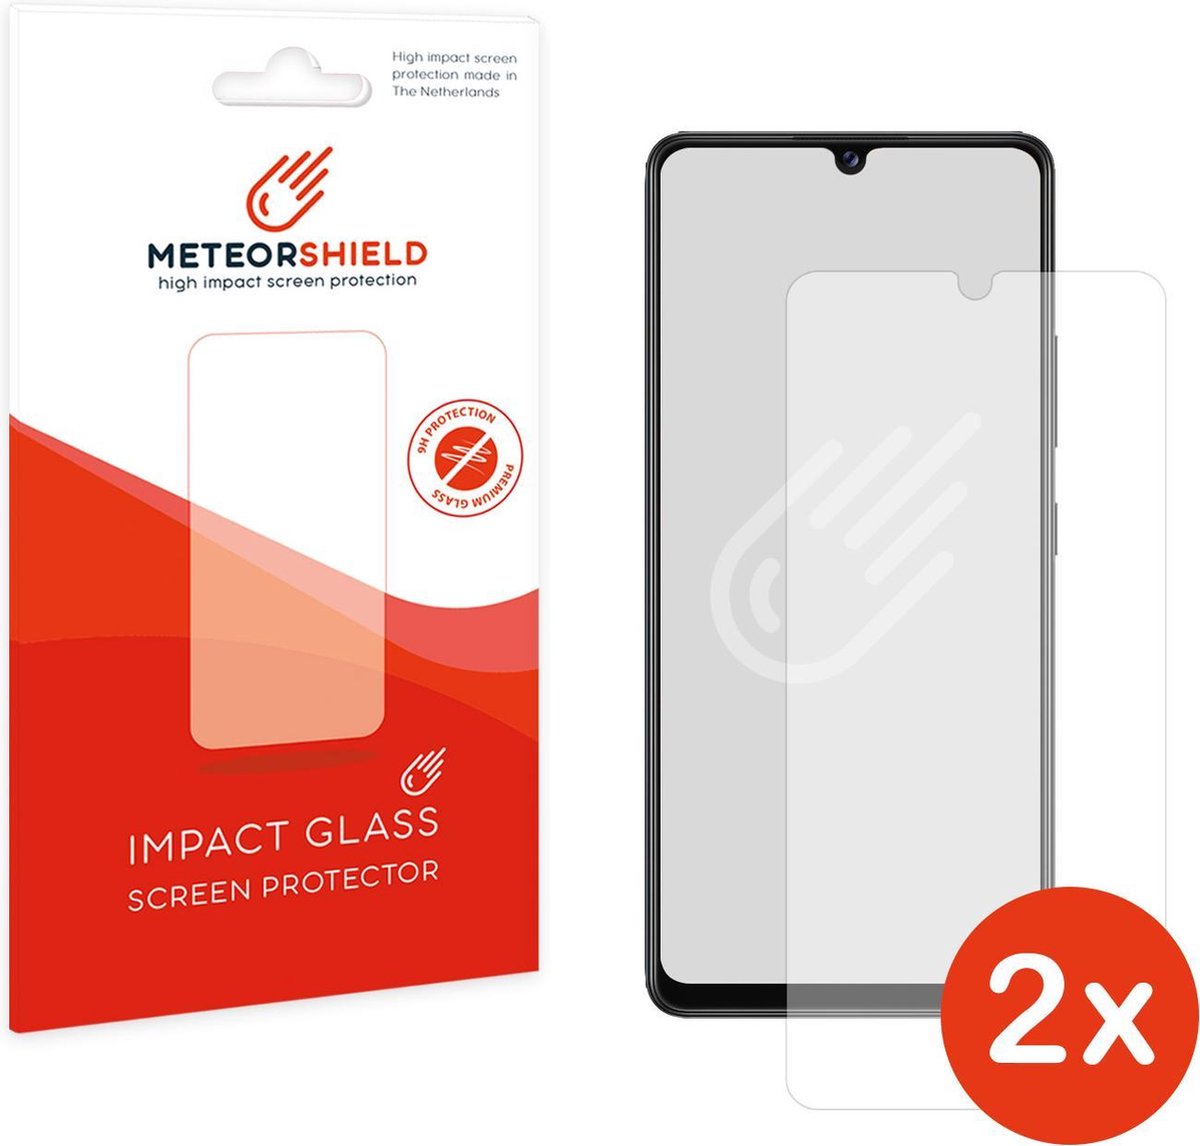 2 stuks: Meteorshield Samsung Galaxy A42 screenprotector - Ultra clear impact glass